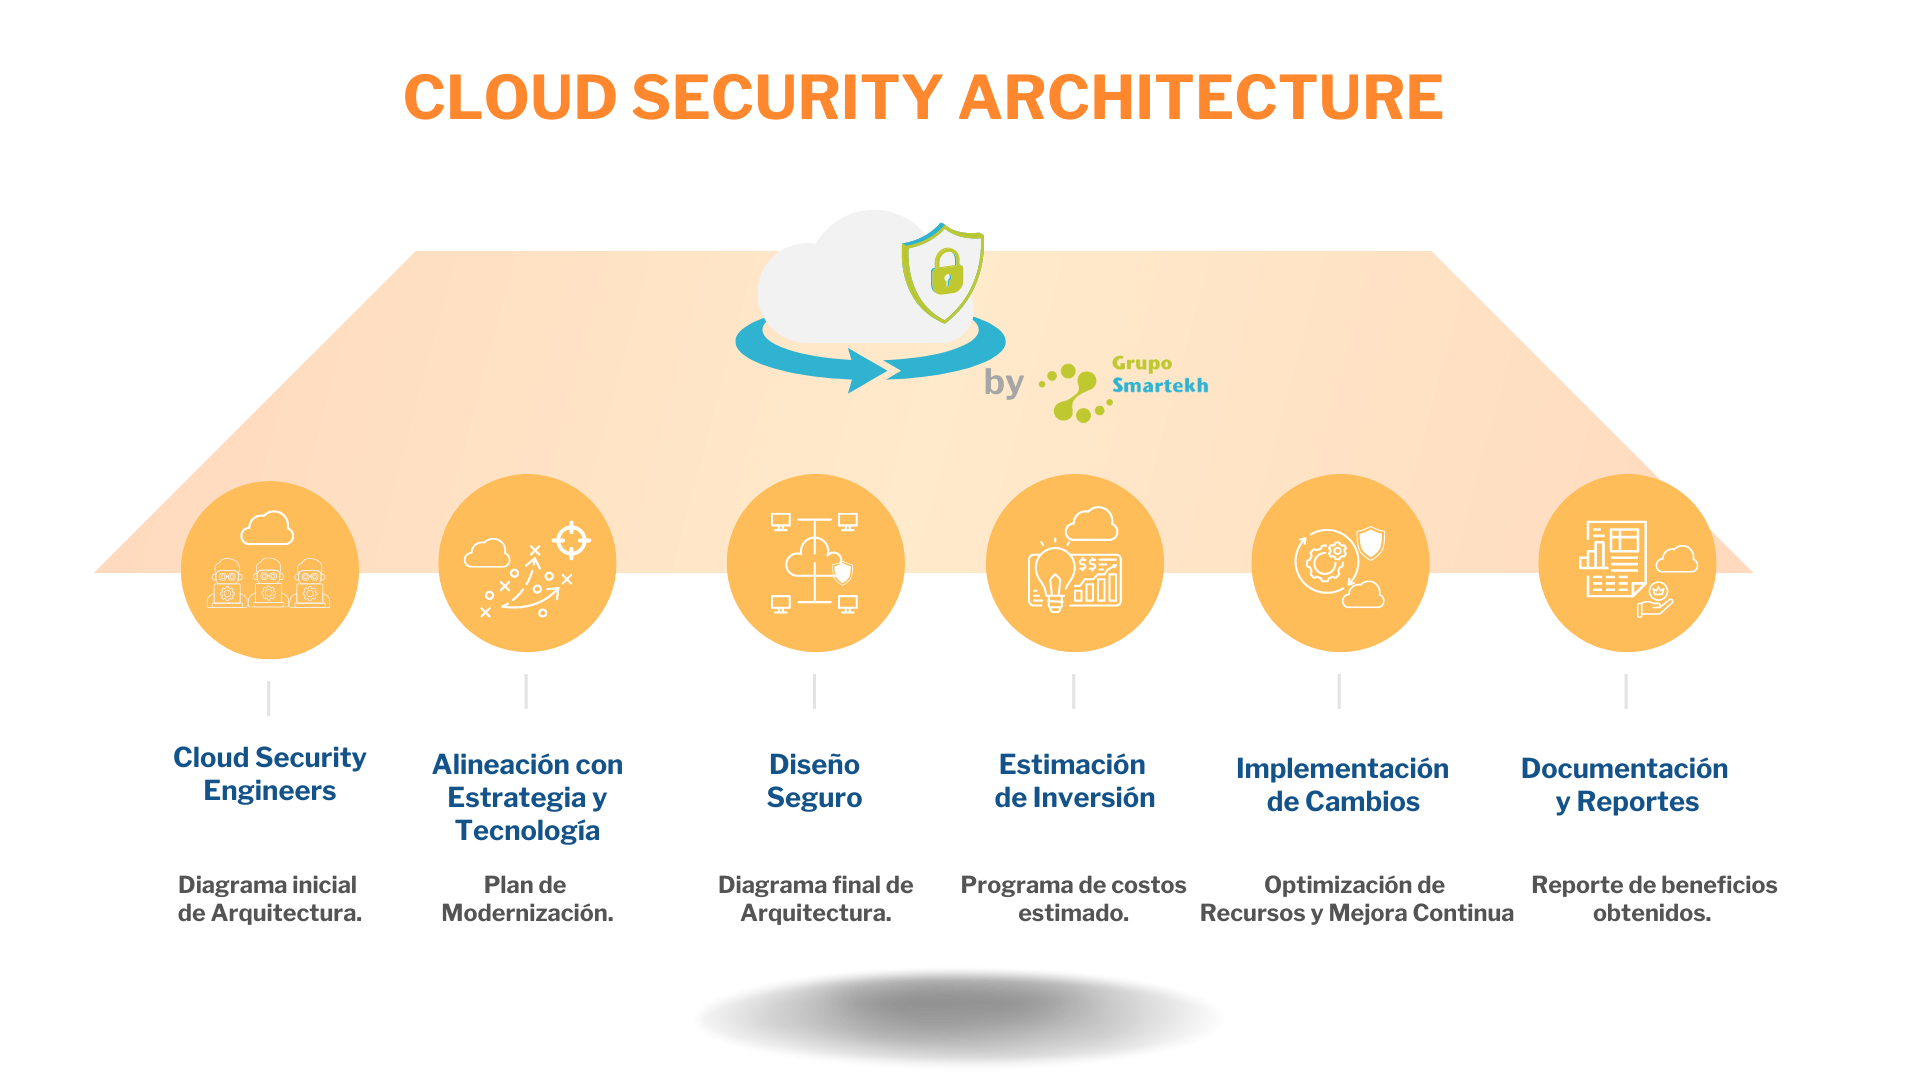 Cloud Security Architecture by Grupo Smartekh